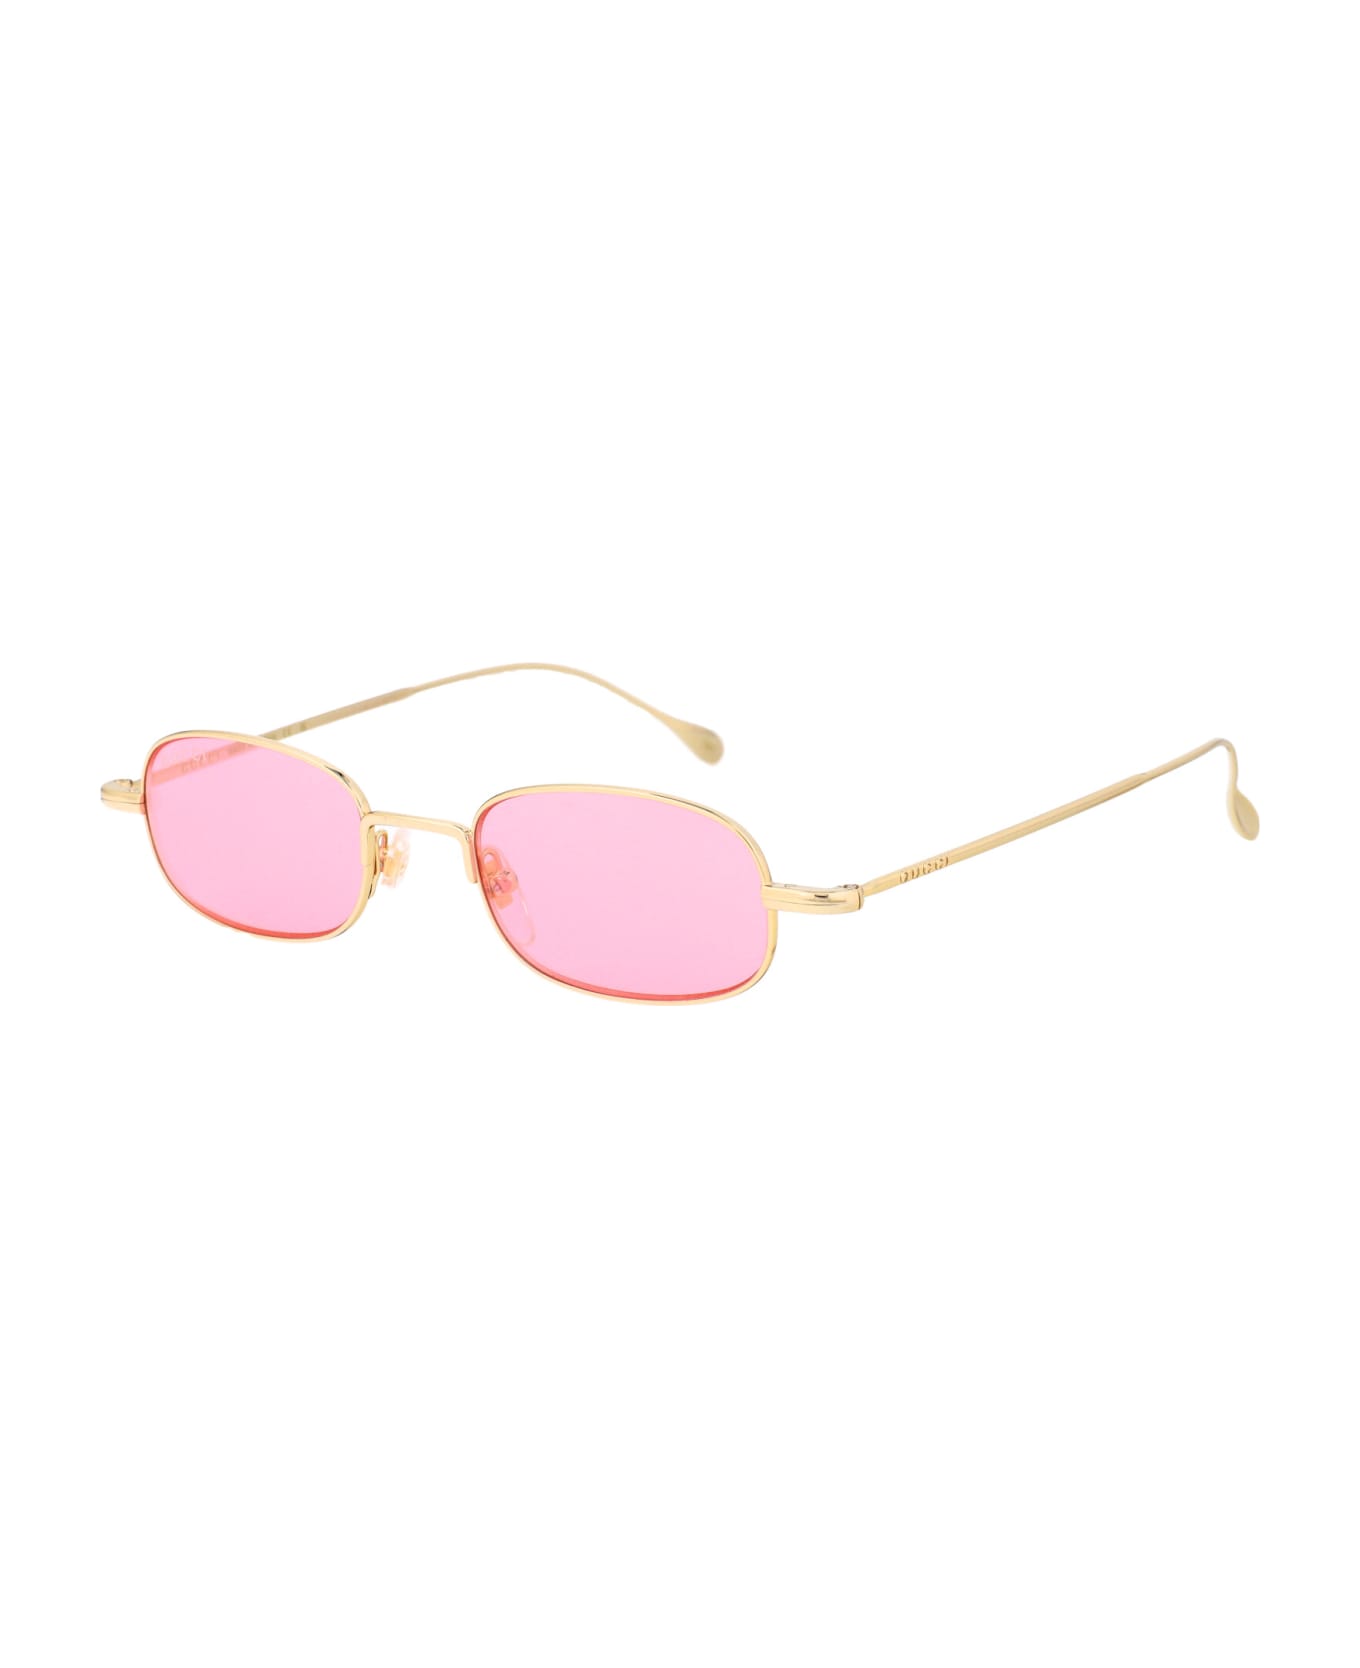 Gucci Eyewear Gg1648s Sunglasses - 005 GOLD GOLD PINK